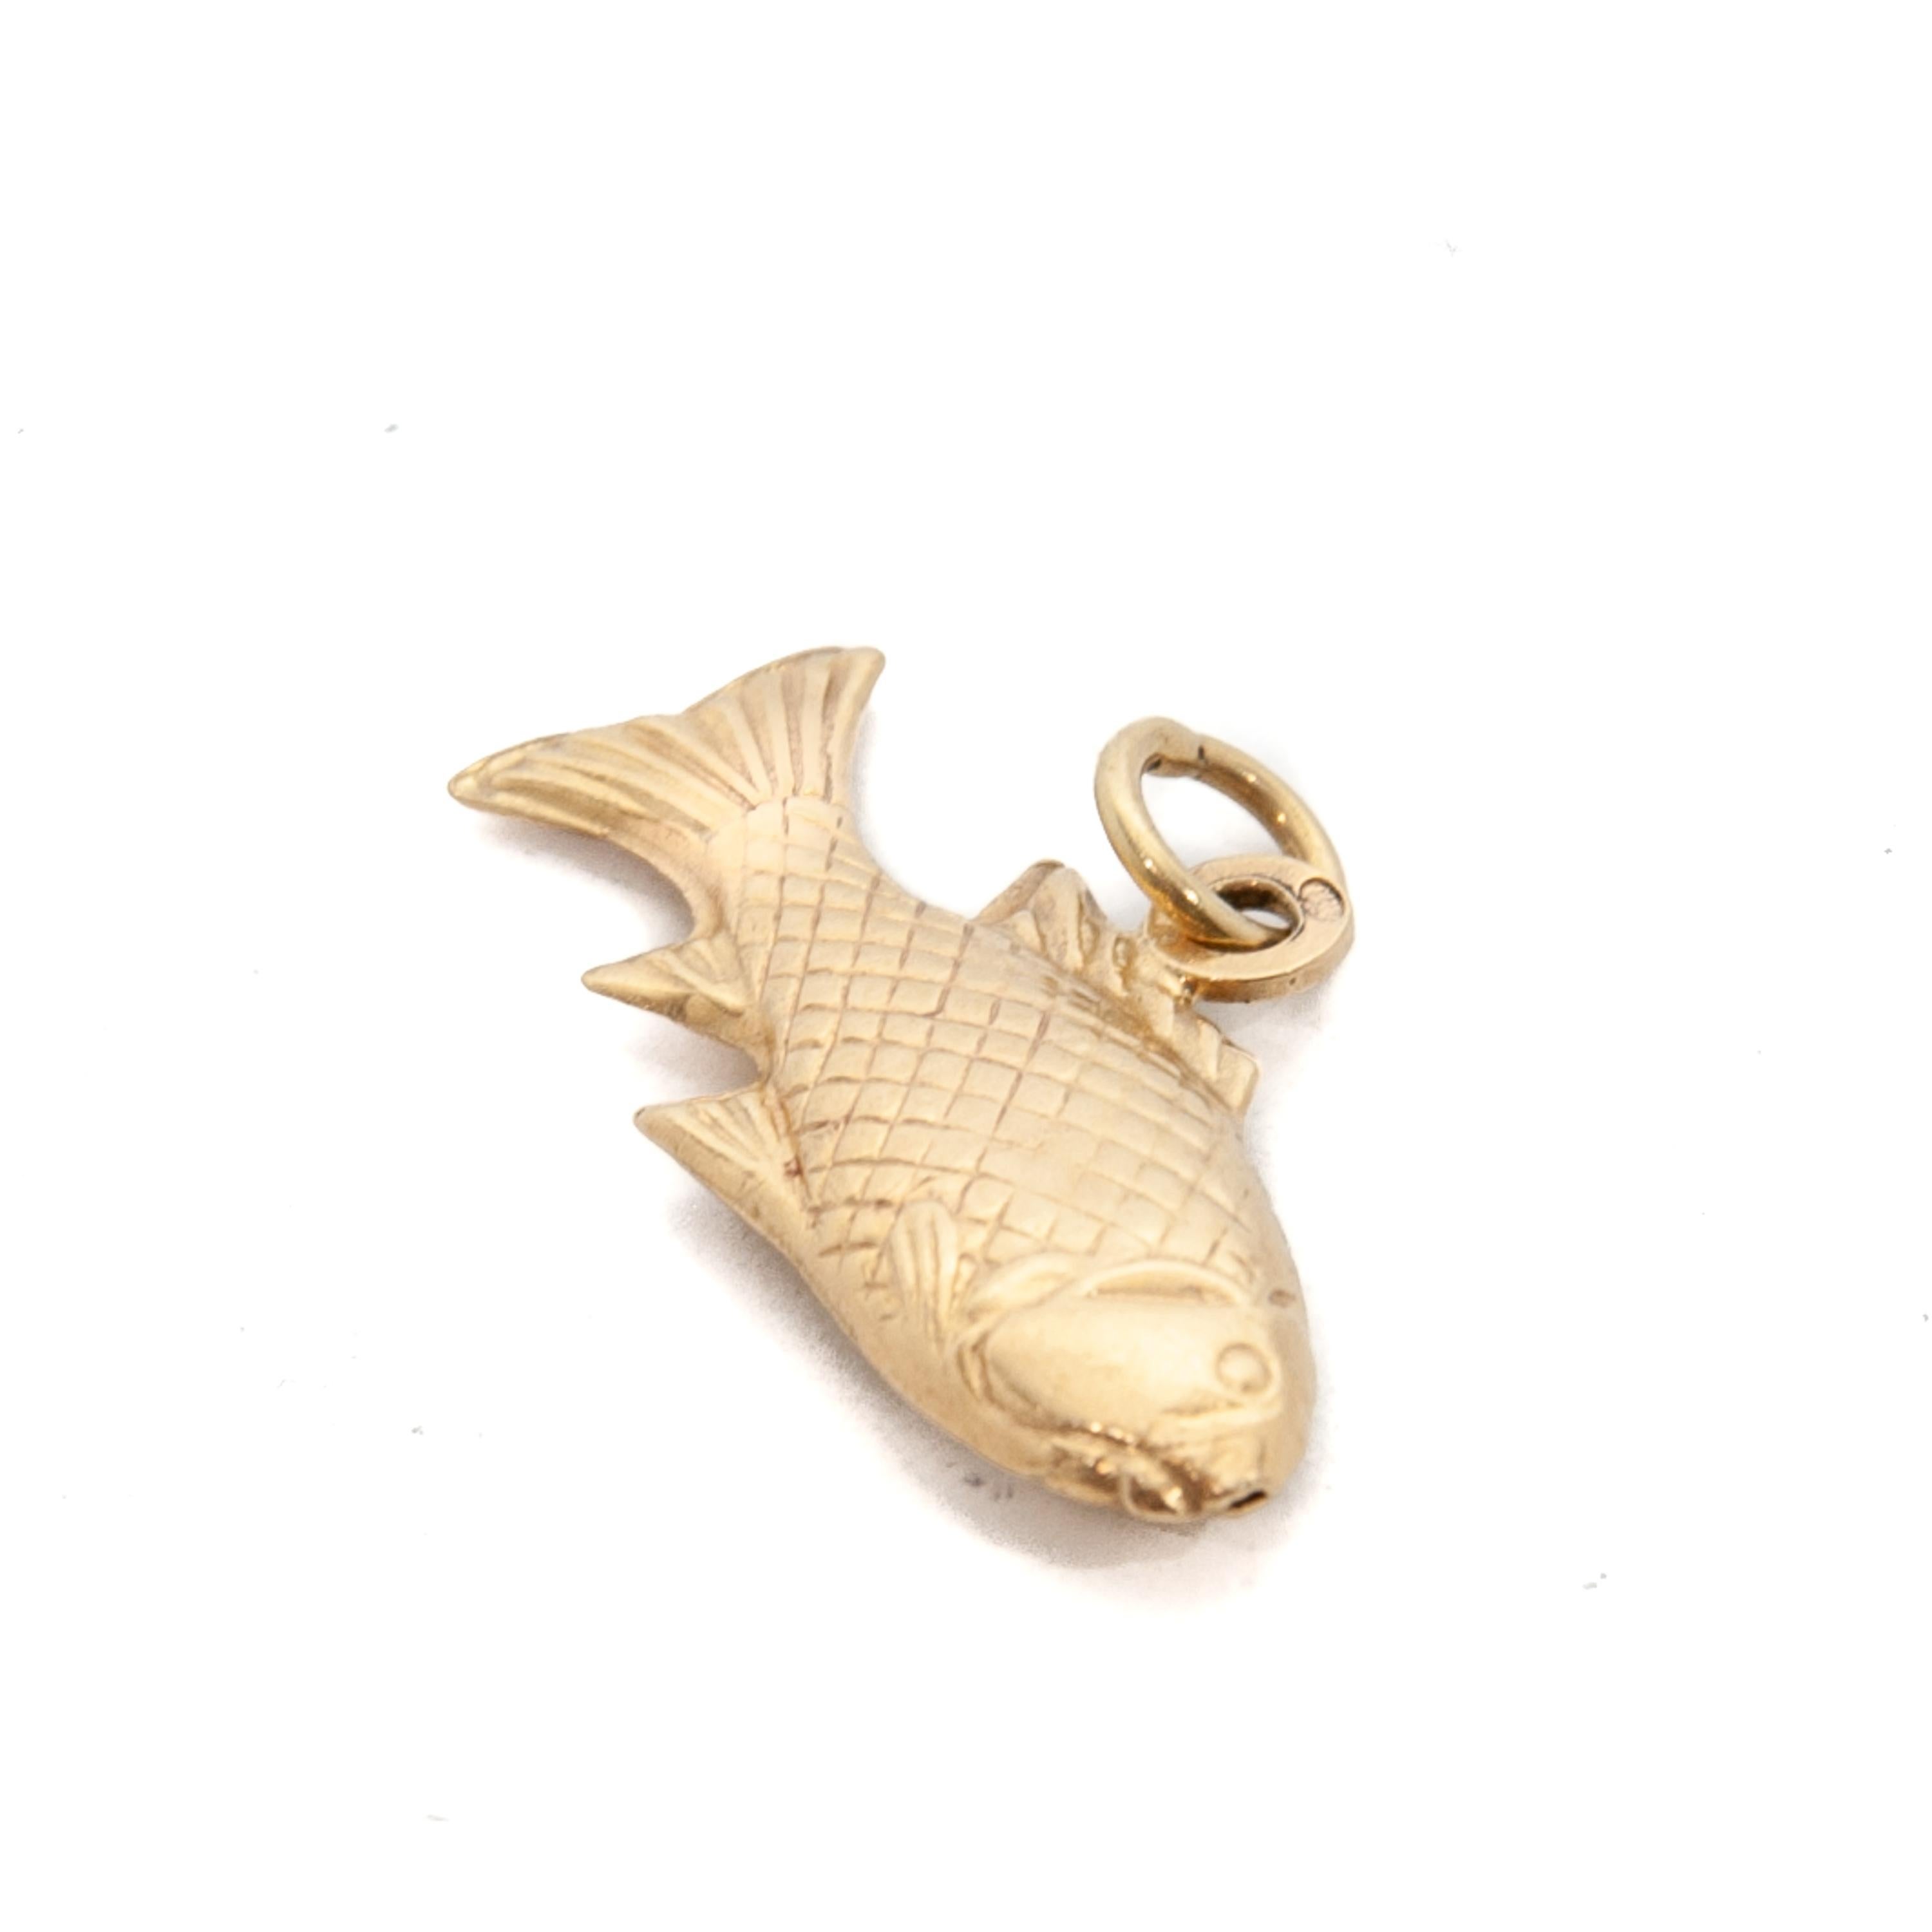 14k gold fish charm